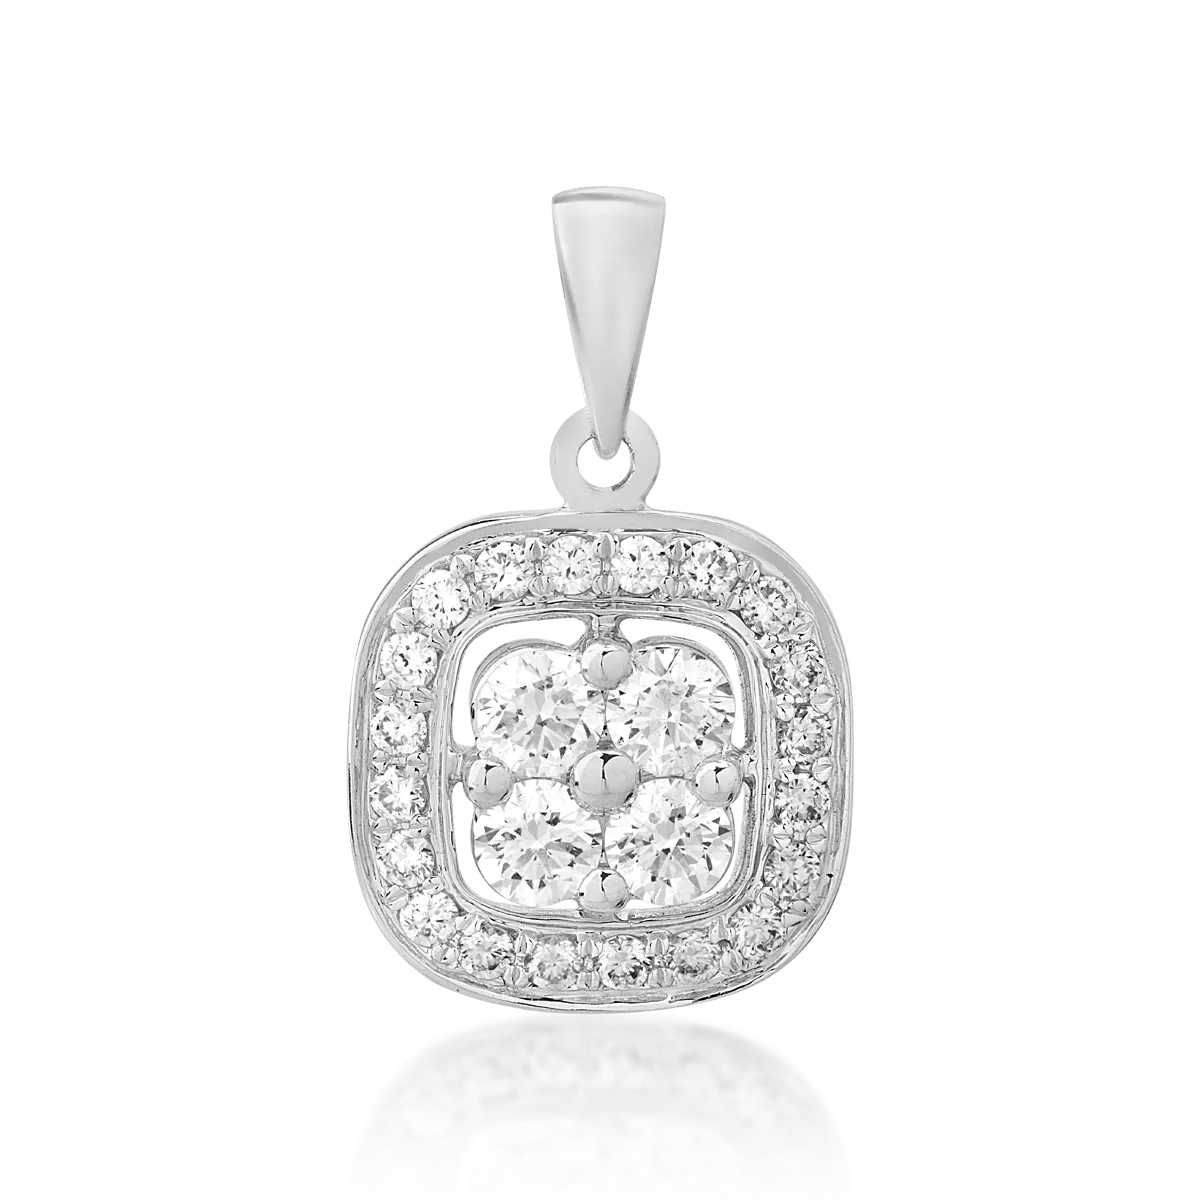 14K white gold pendant with 0.35ct diamonds